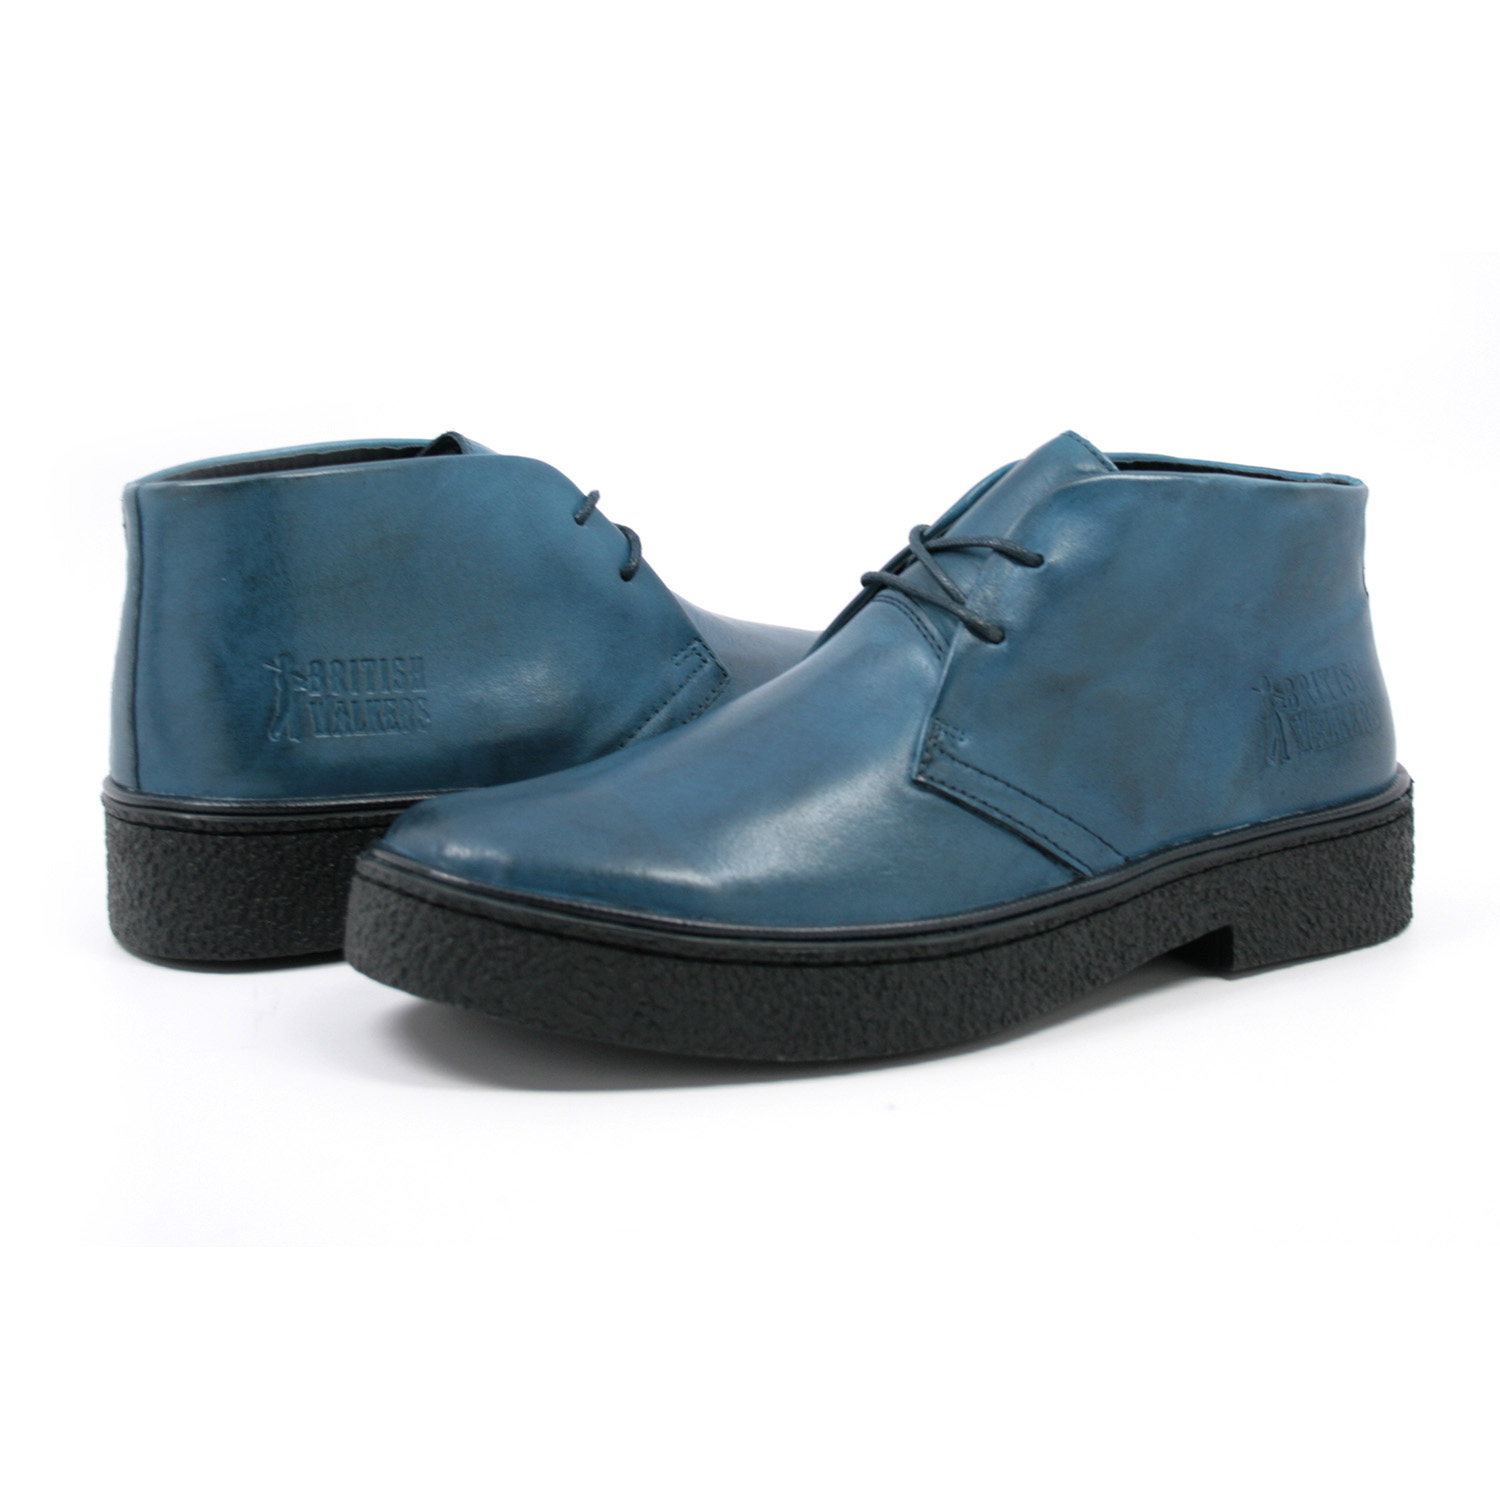 Classic Playboy Chukka Boot Denim Blue Leather [1226-5] - $118.00 ...